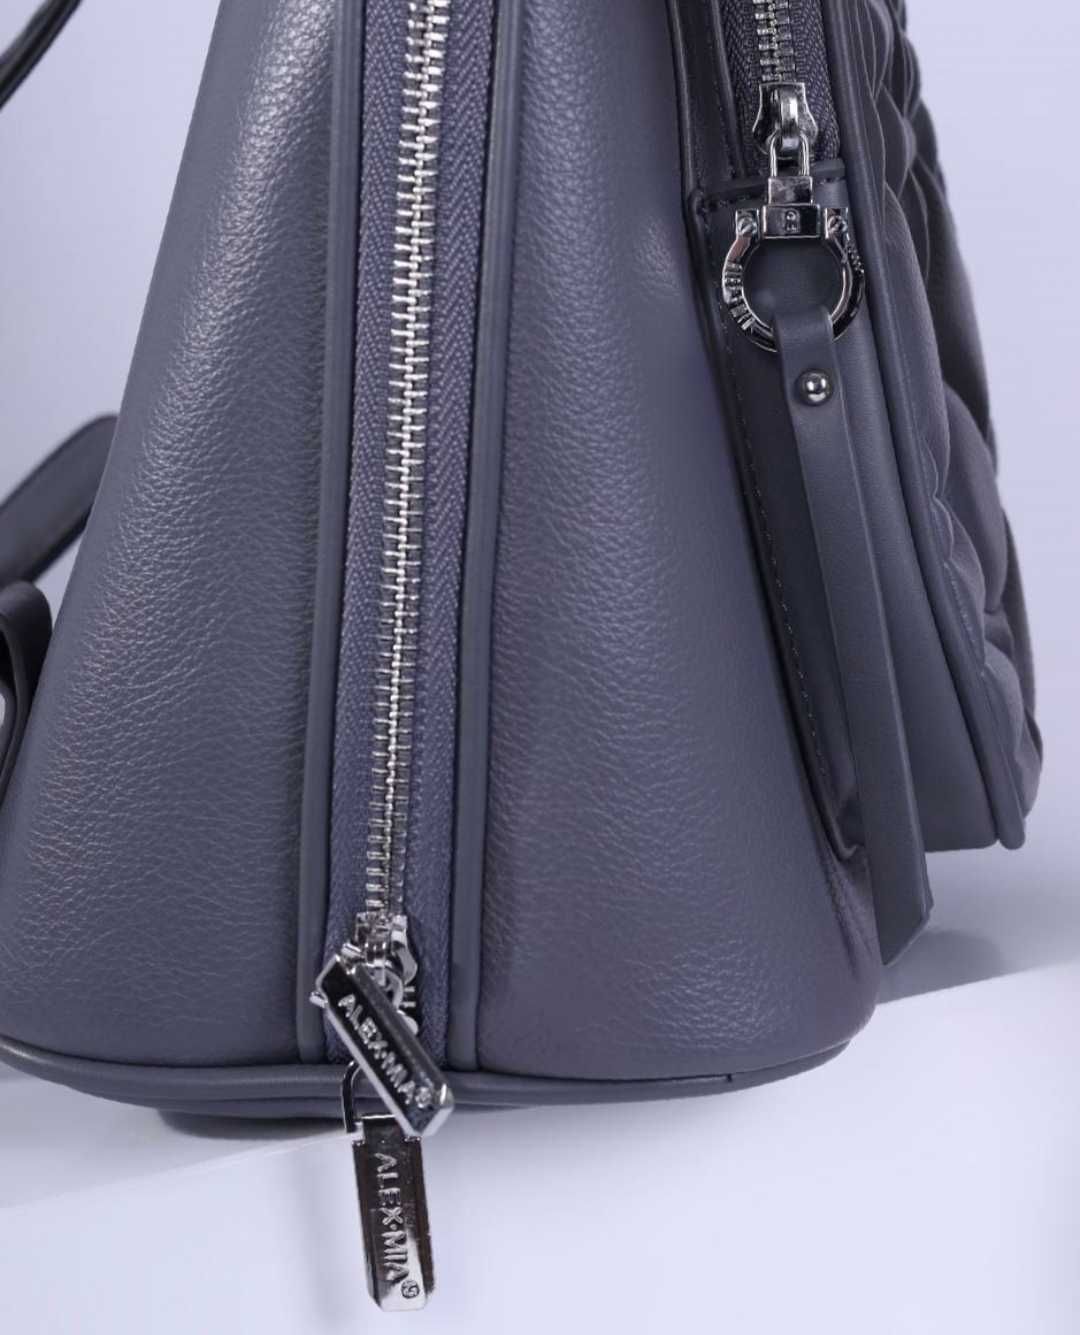 Женские рюкзаки ALEX & MIA Эко-кожа. Качество. Цвета-Black,Gray,Purple